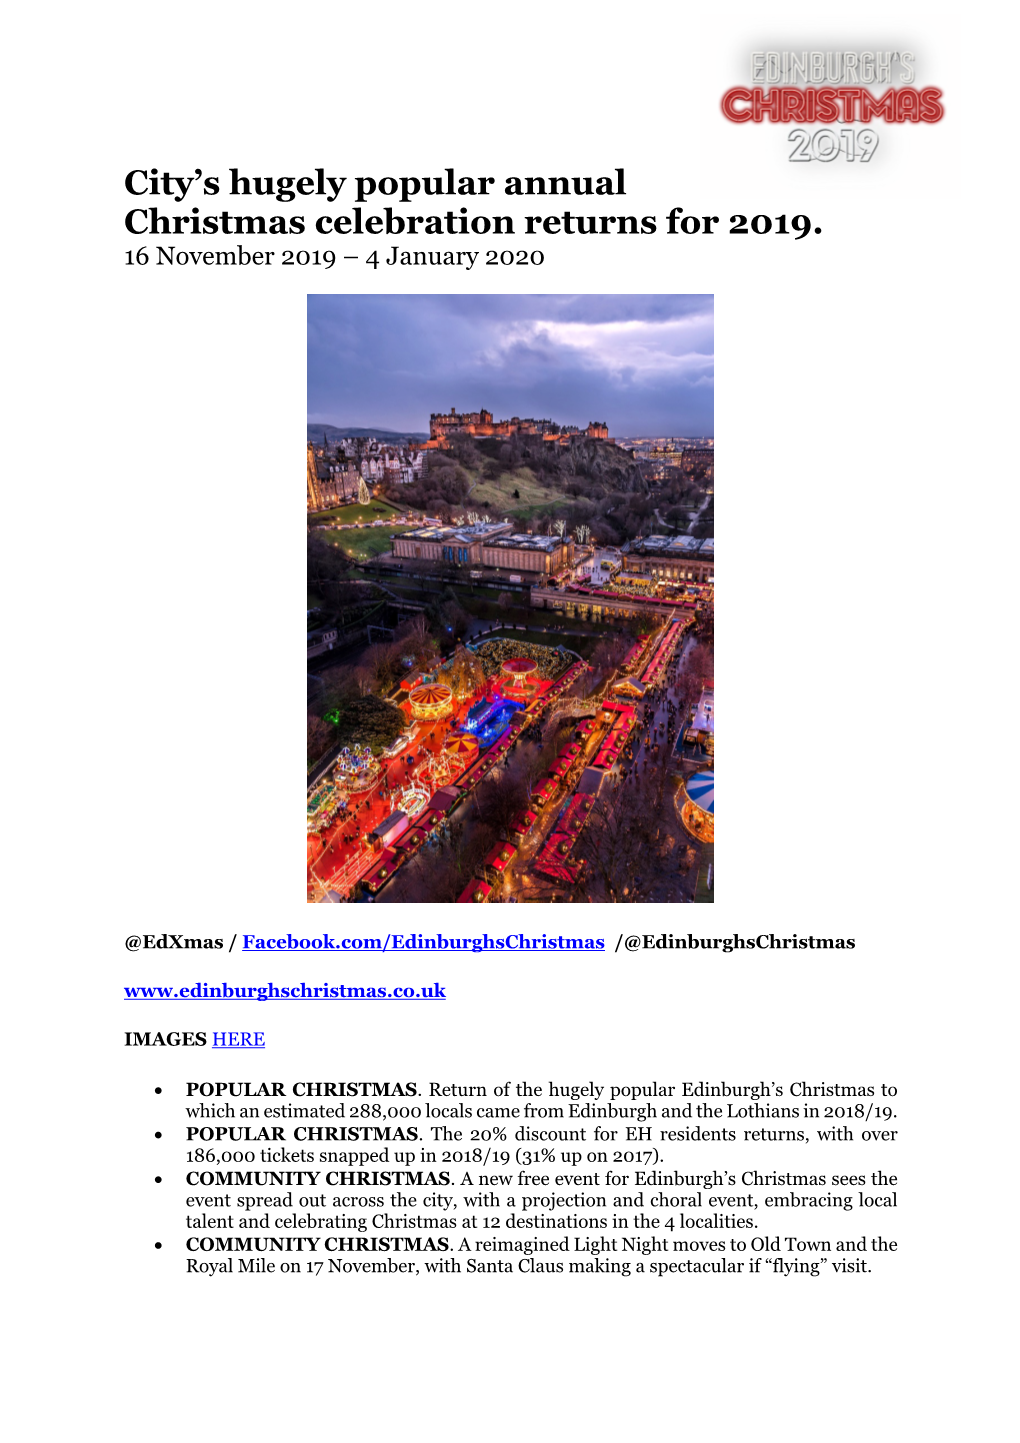 Edinburgh's Christmas 2019 Press Release FINAL 15 Oct 2019